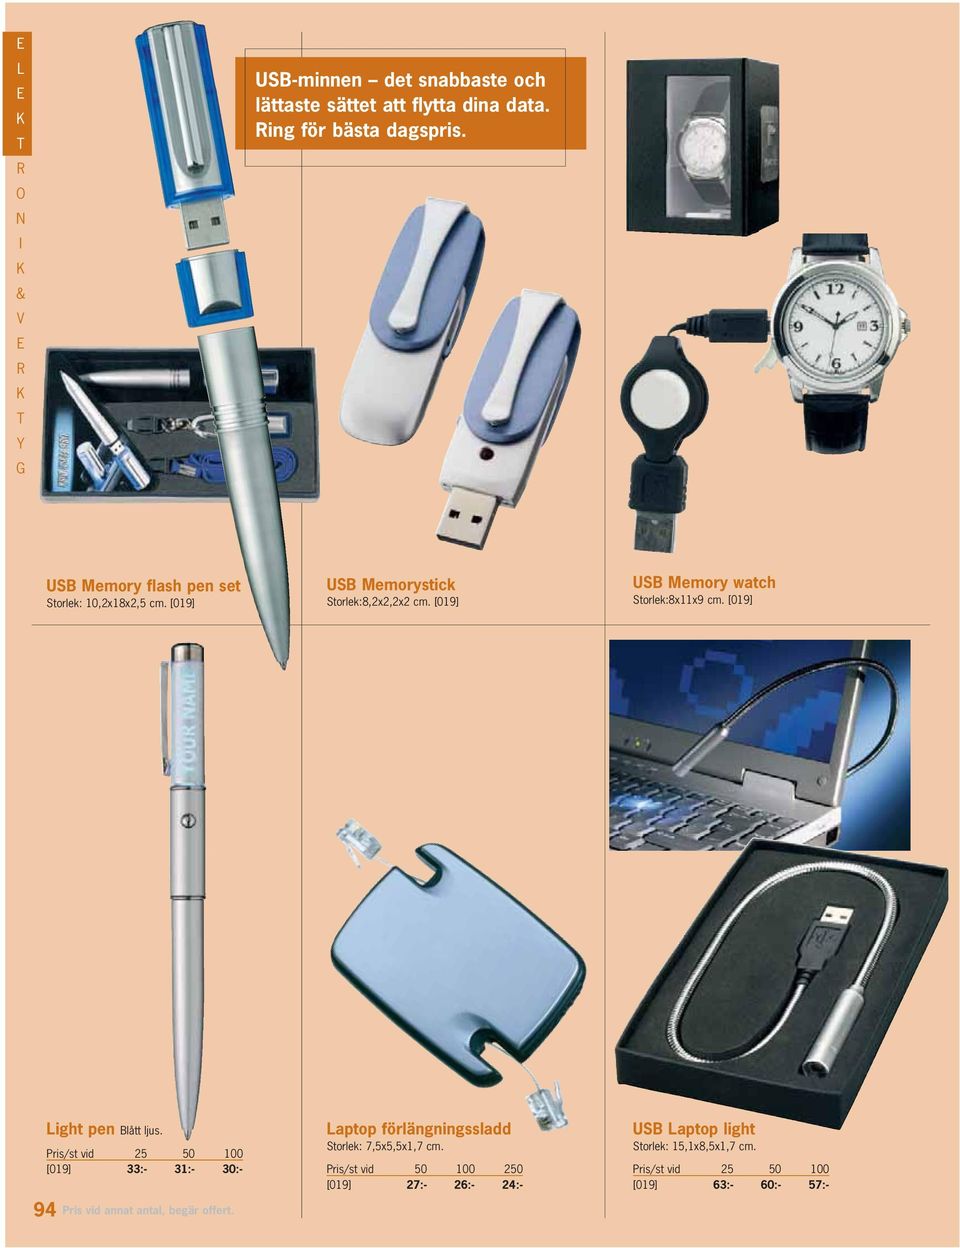 [019] USB Memory watch Storlek:8x11x9 cm. [019] ight pen Blått ljus.